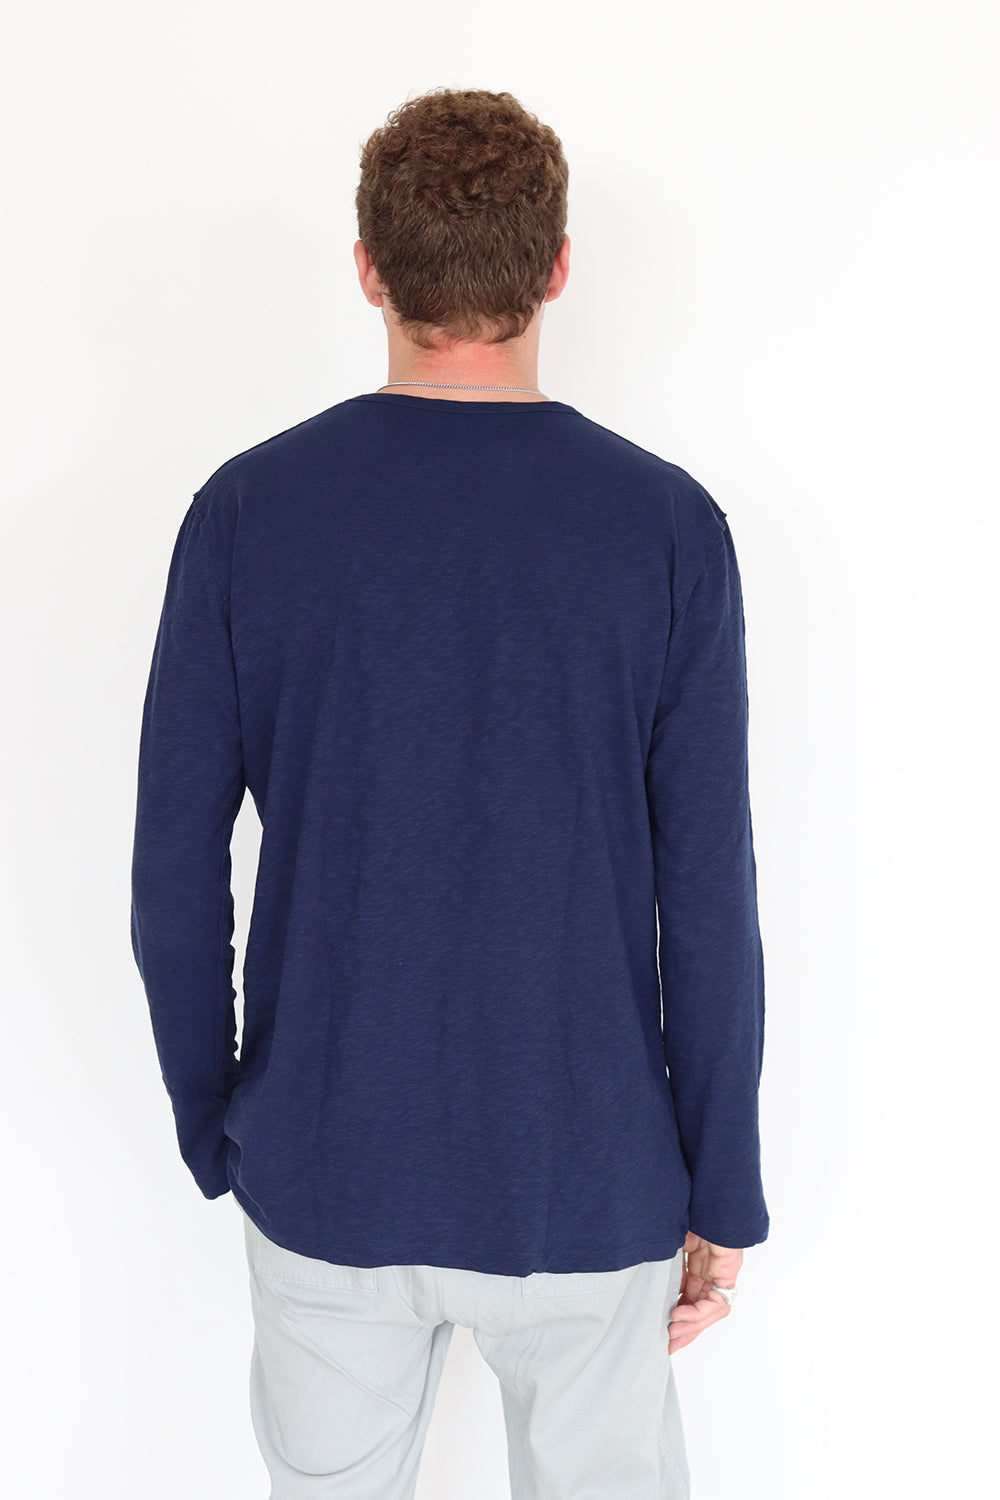 Dark Blue Long Sleeve T-Shirt